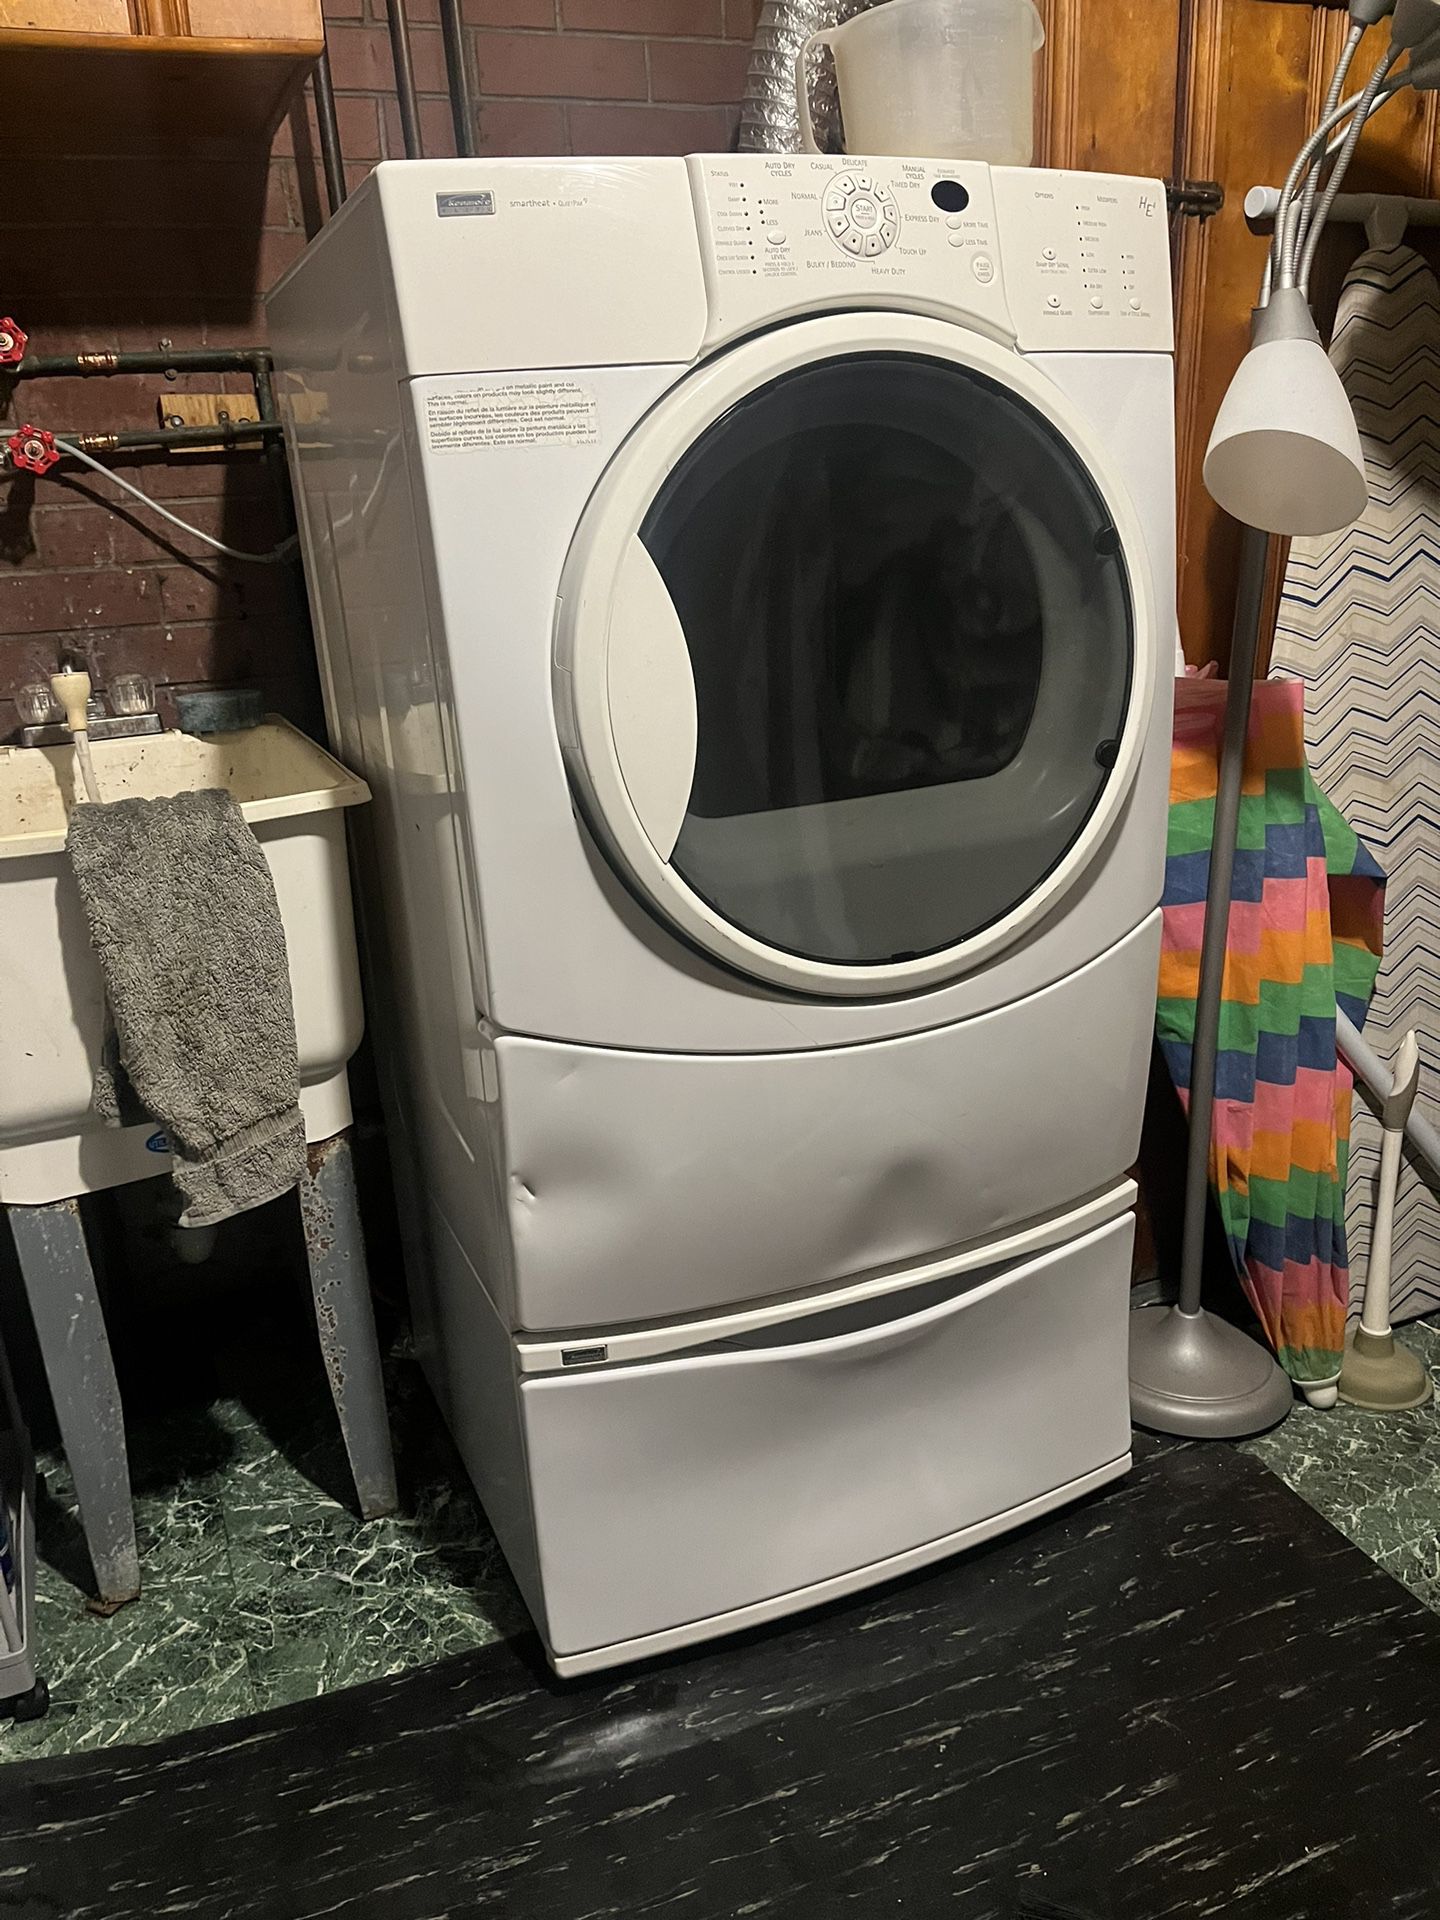 Kenmore elite Dryer